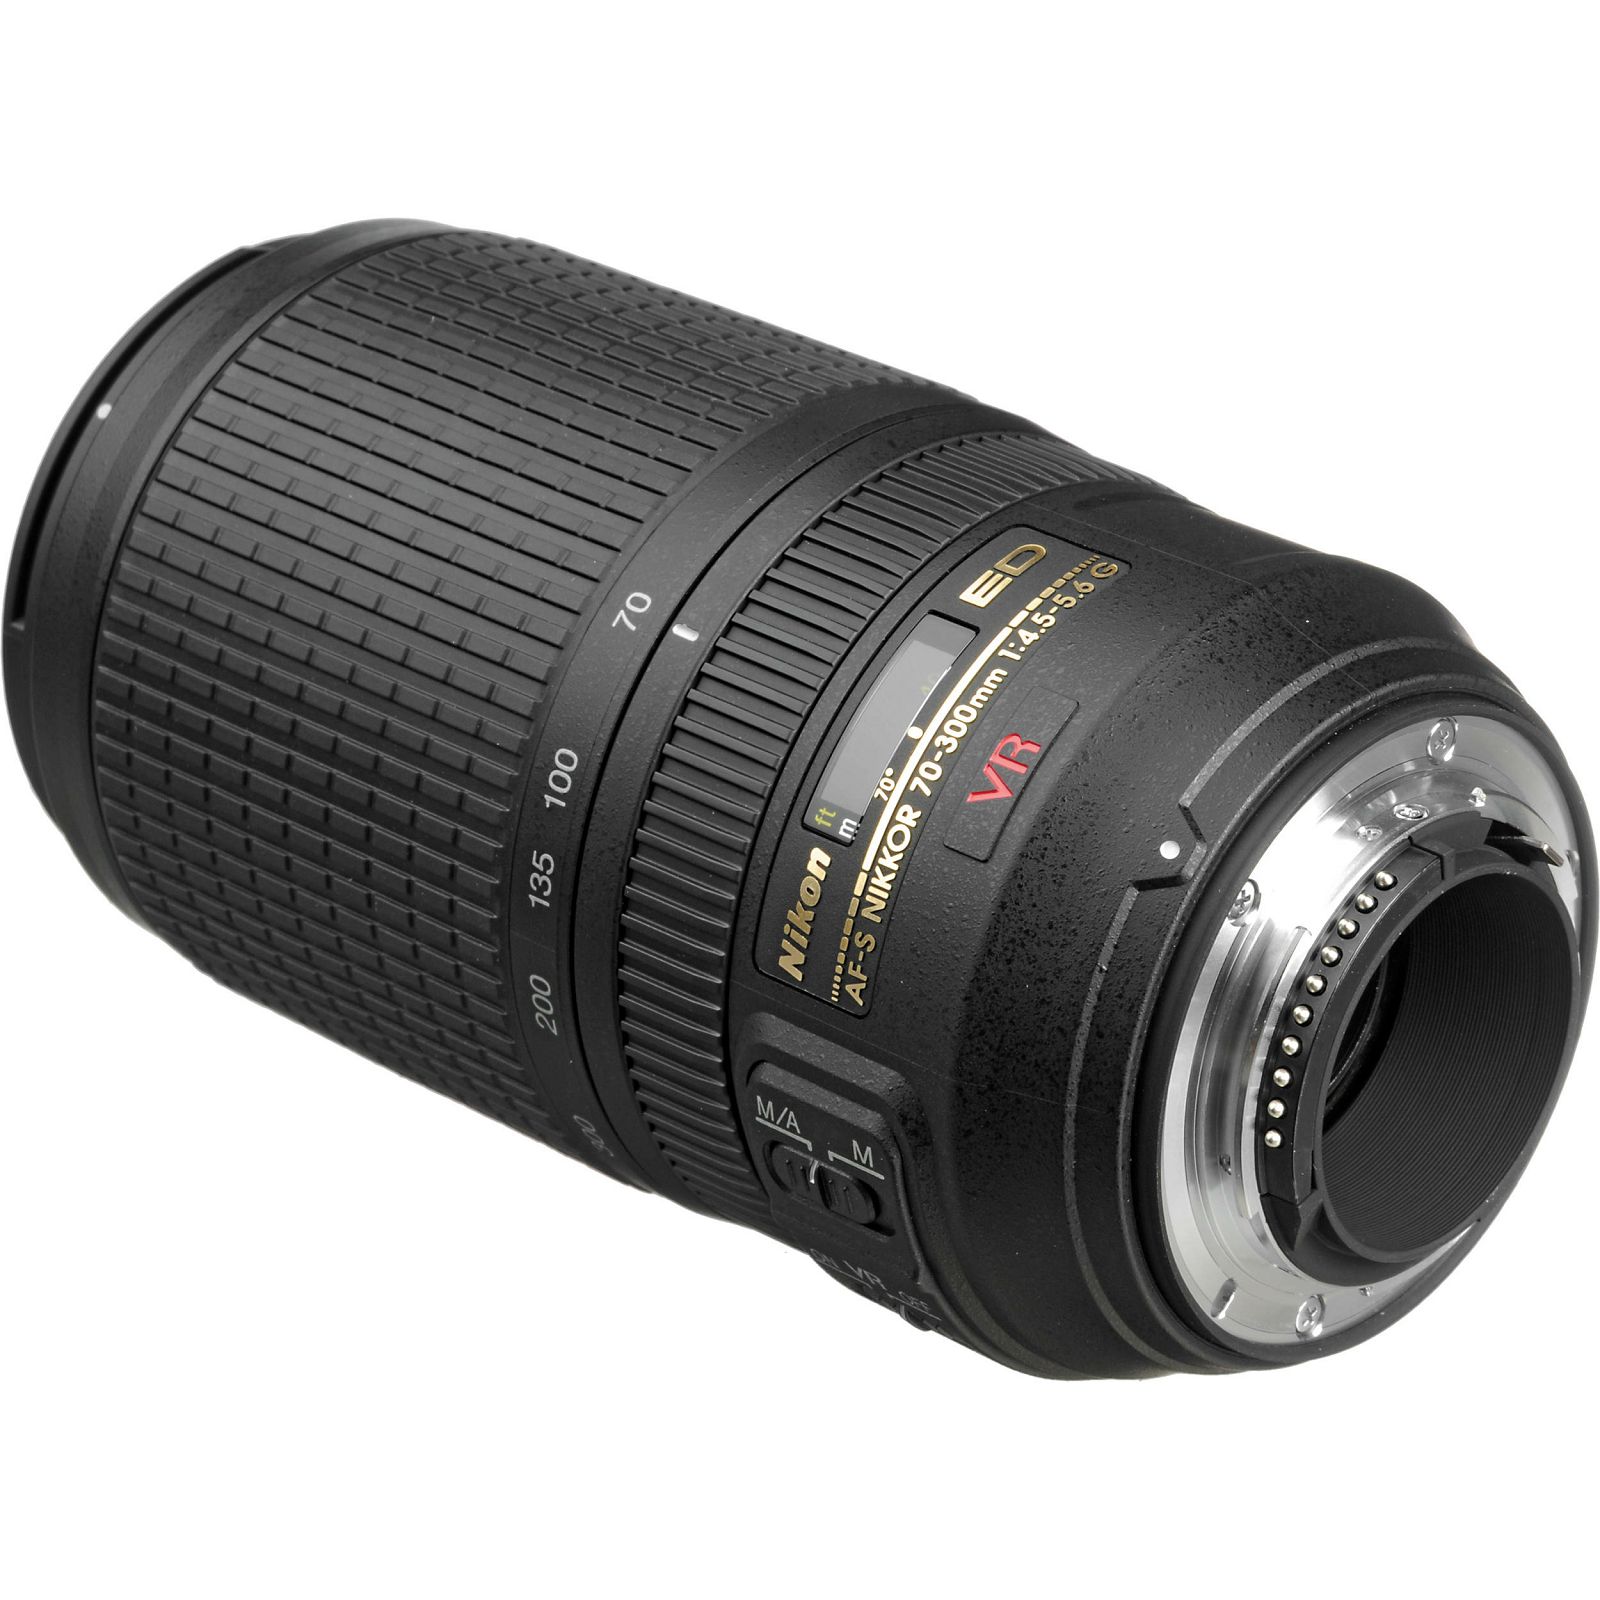 Nikon AF-S 70-300mm f/4.5-5.6G IF-ED VR FX telefoto objektiv Nikkor 70-300 4.5-5.6 G auto focus lens (JAA795DA)